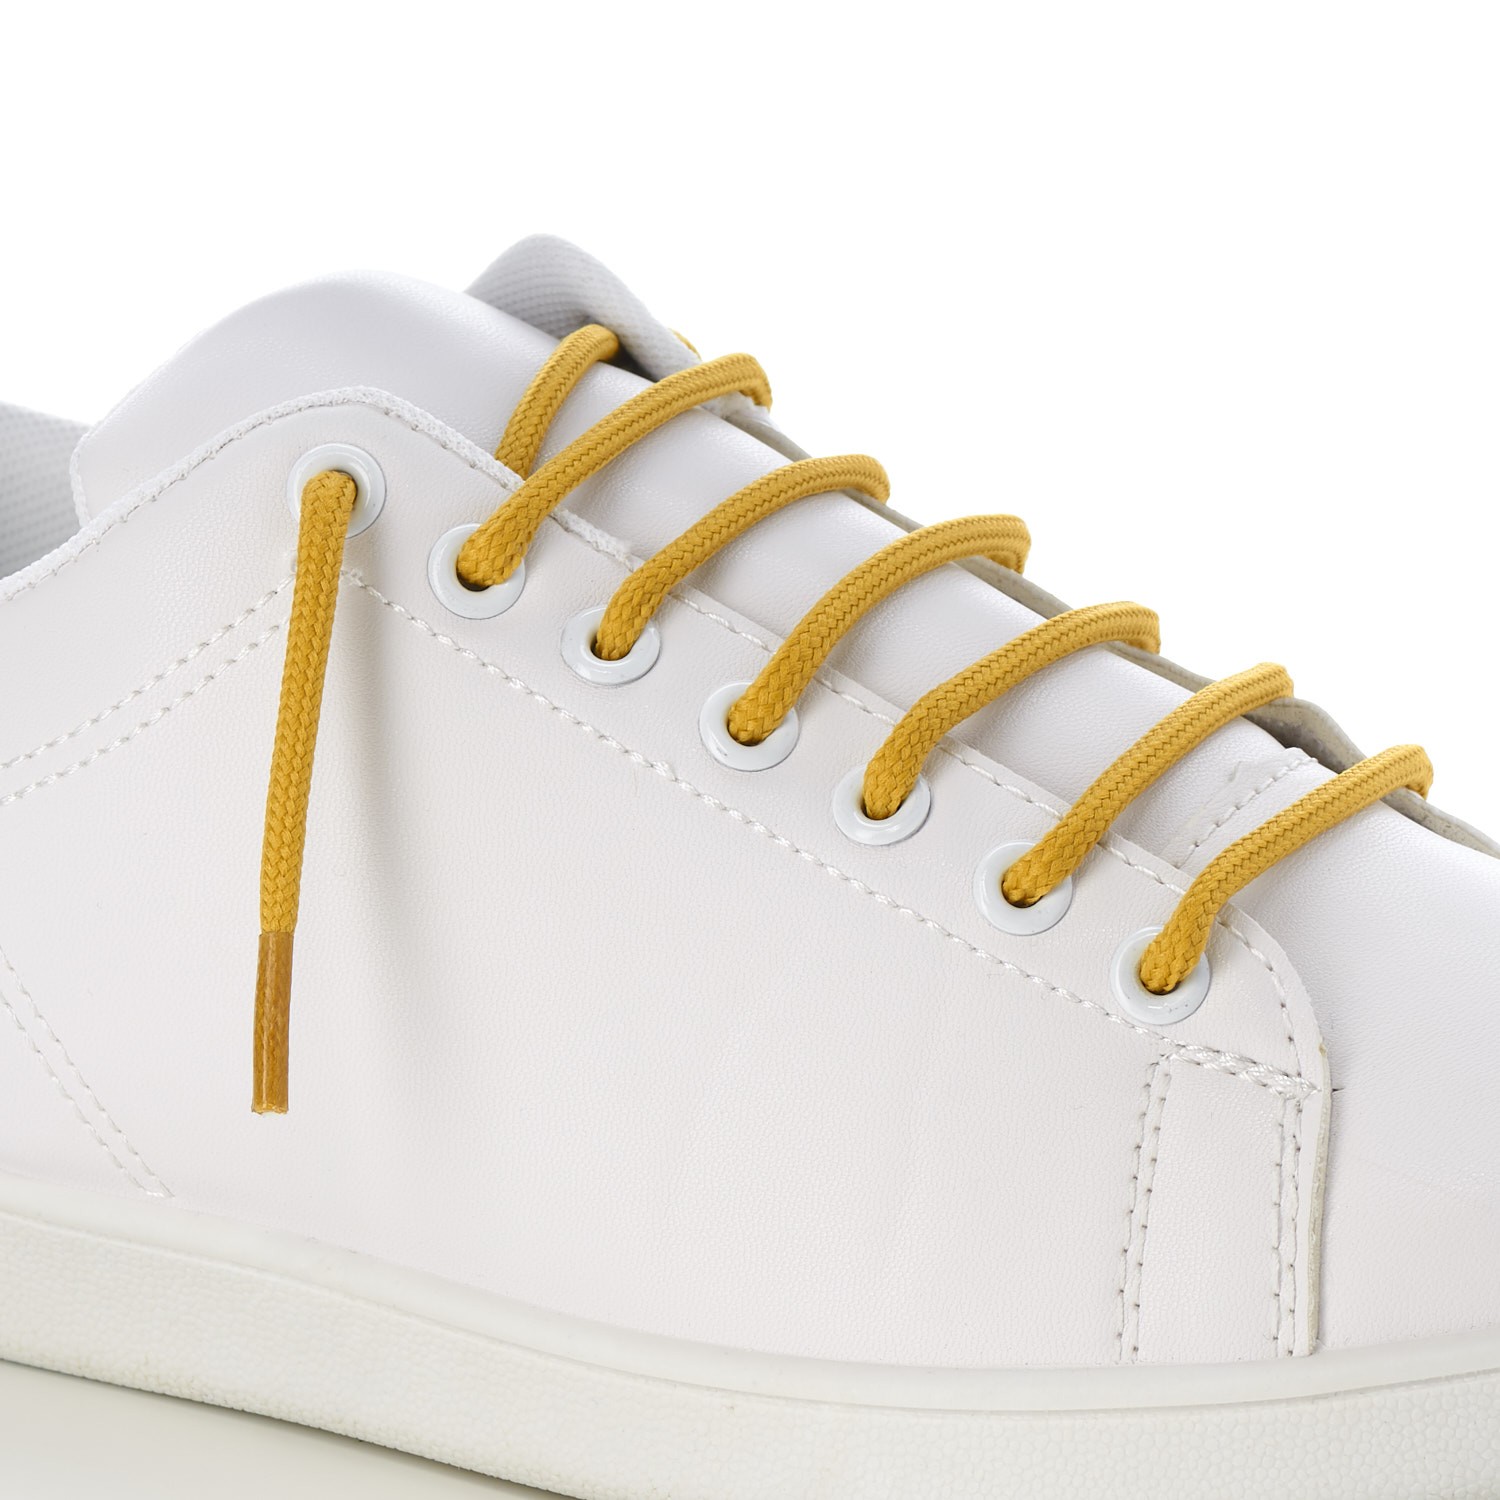 sovereign grade shoelaces